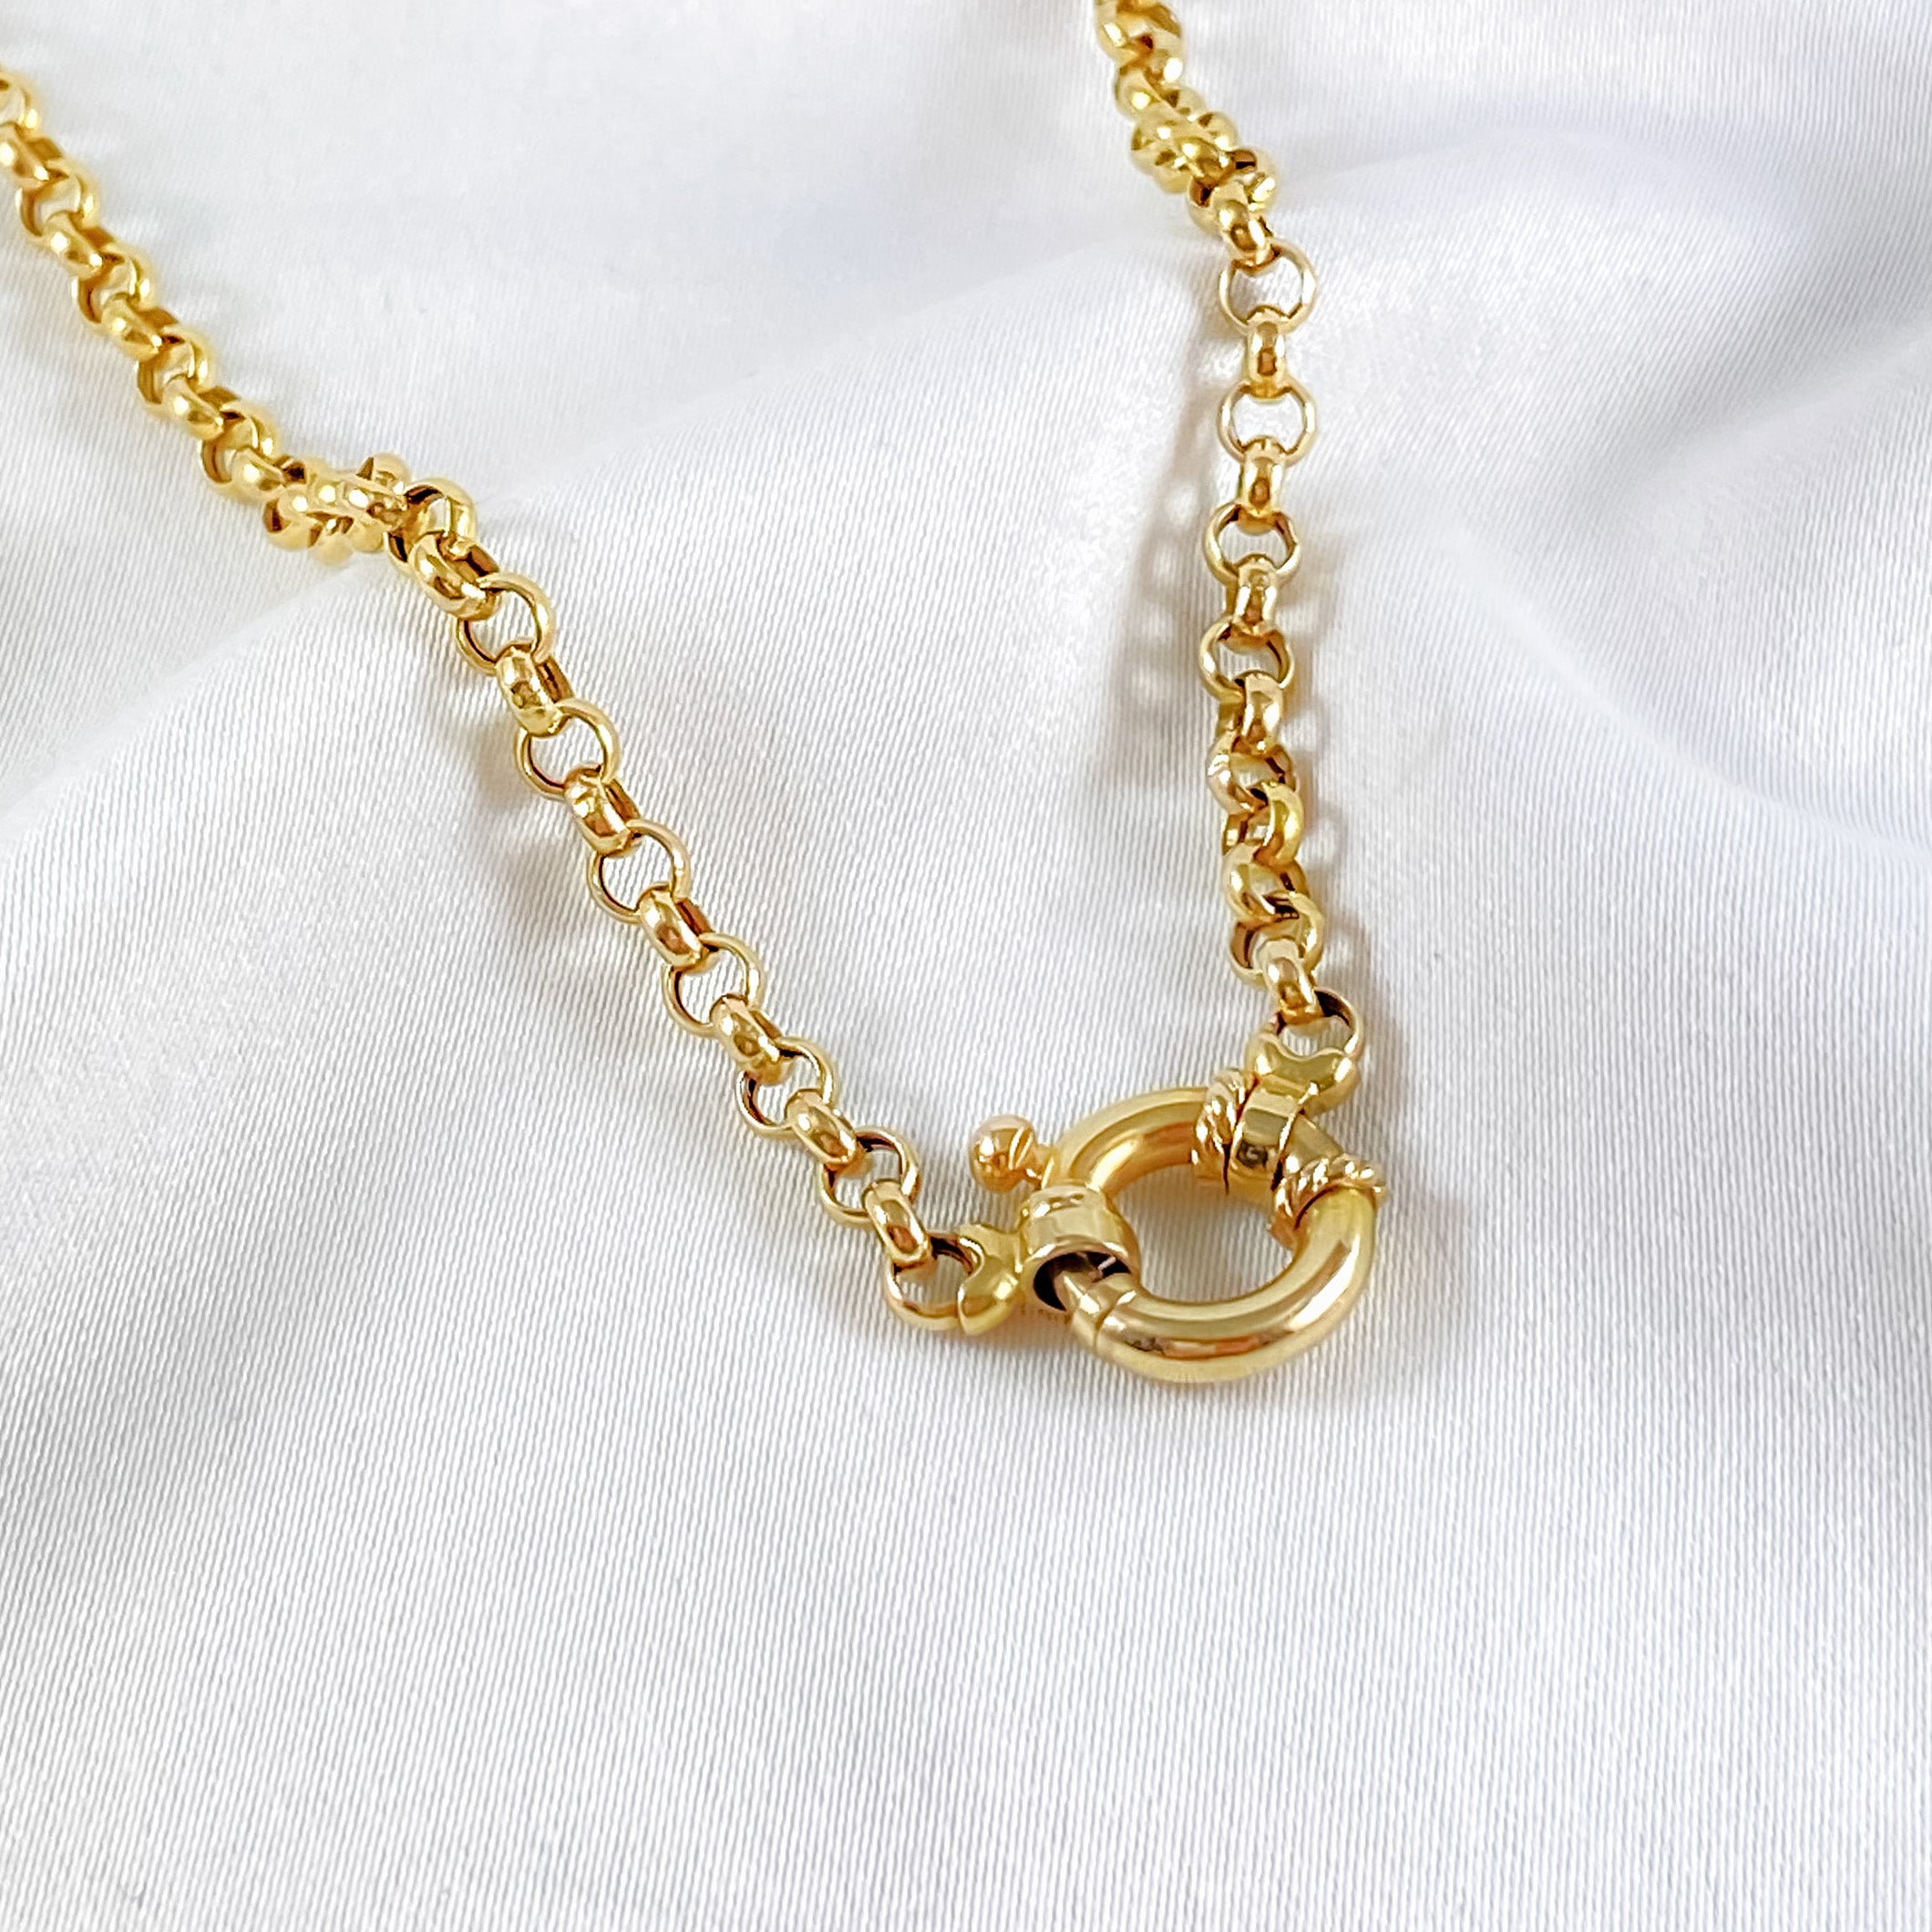 Vintage Jasseron Necklace with Spinglock